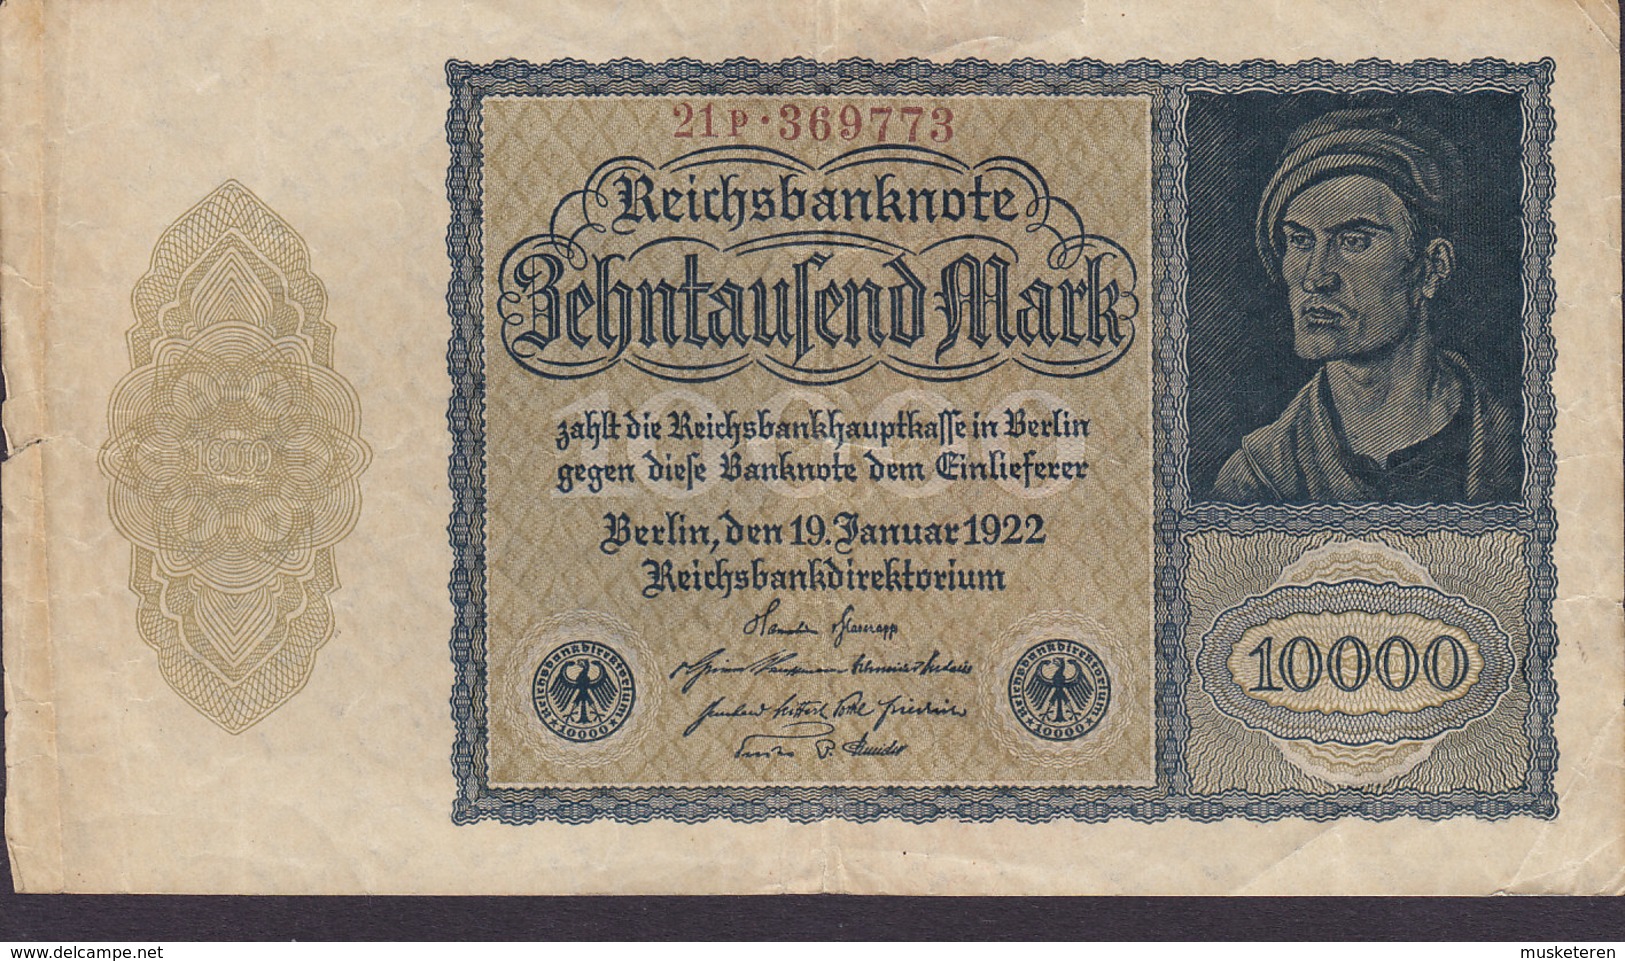 Germany - 10.000 MARK Reichsbanknote Berlin (19-1-1922) 21p 369773 (2 Scans) - 10000 Mark